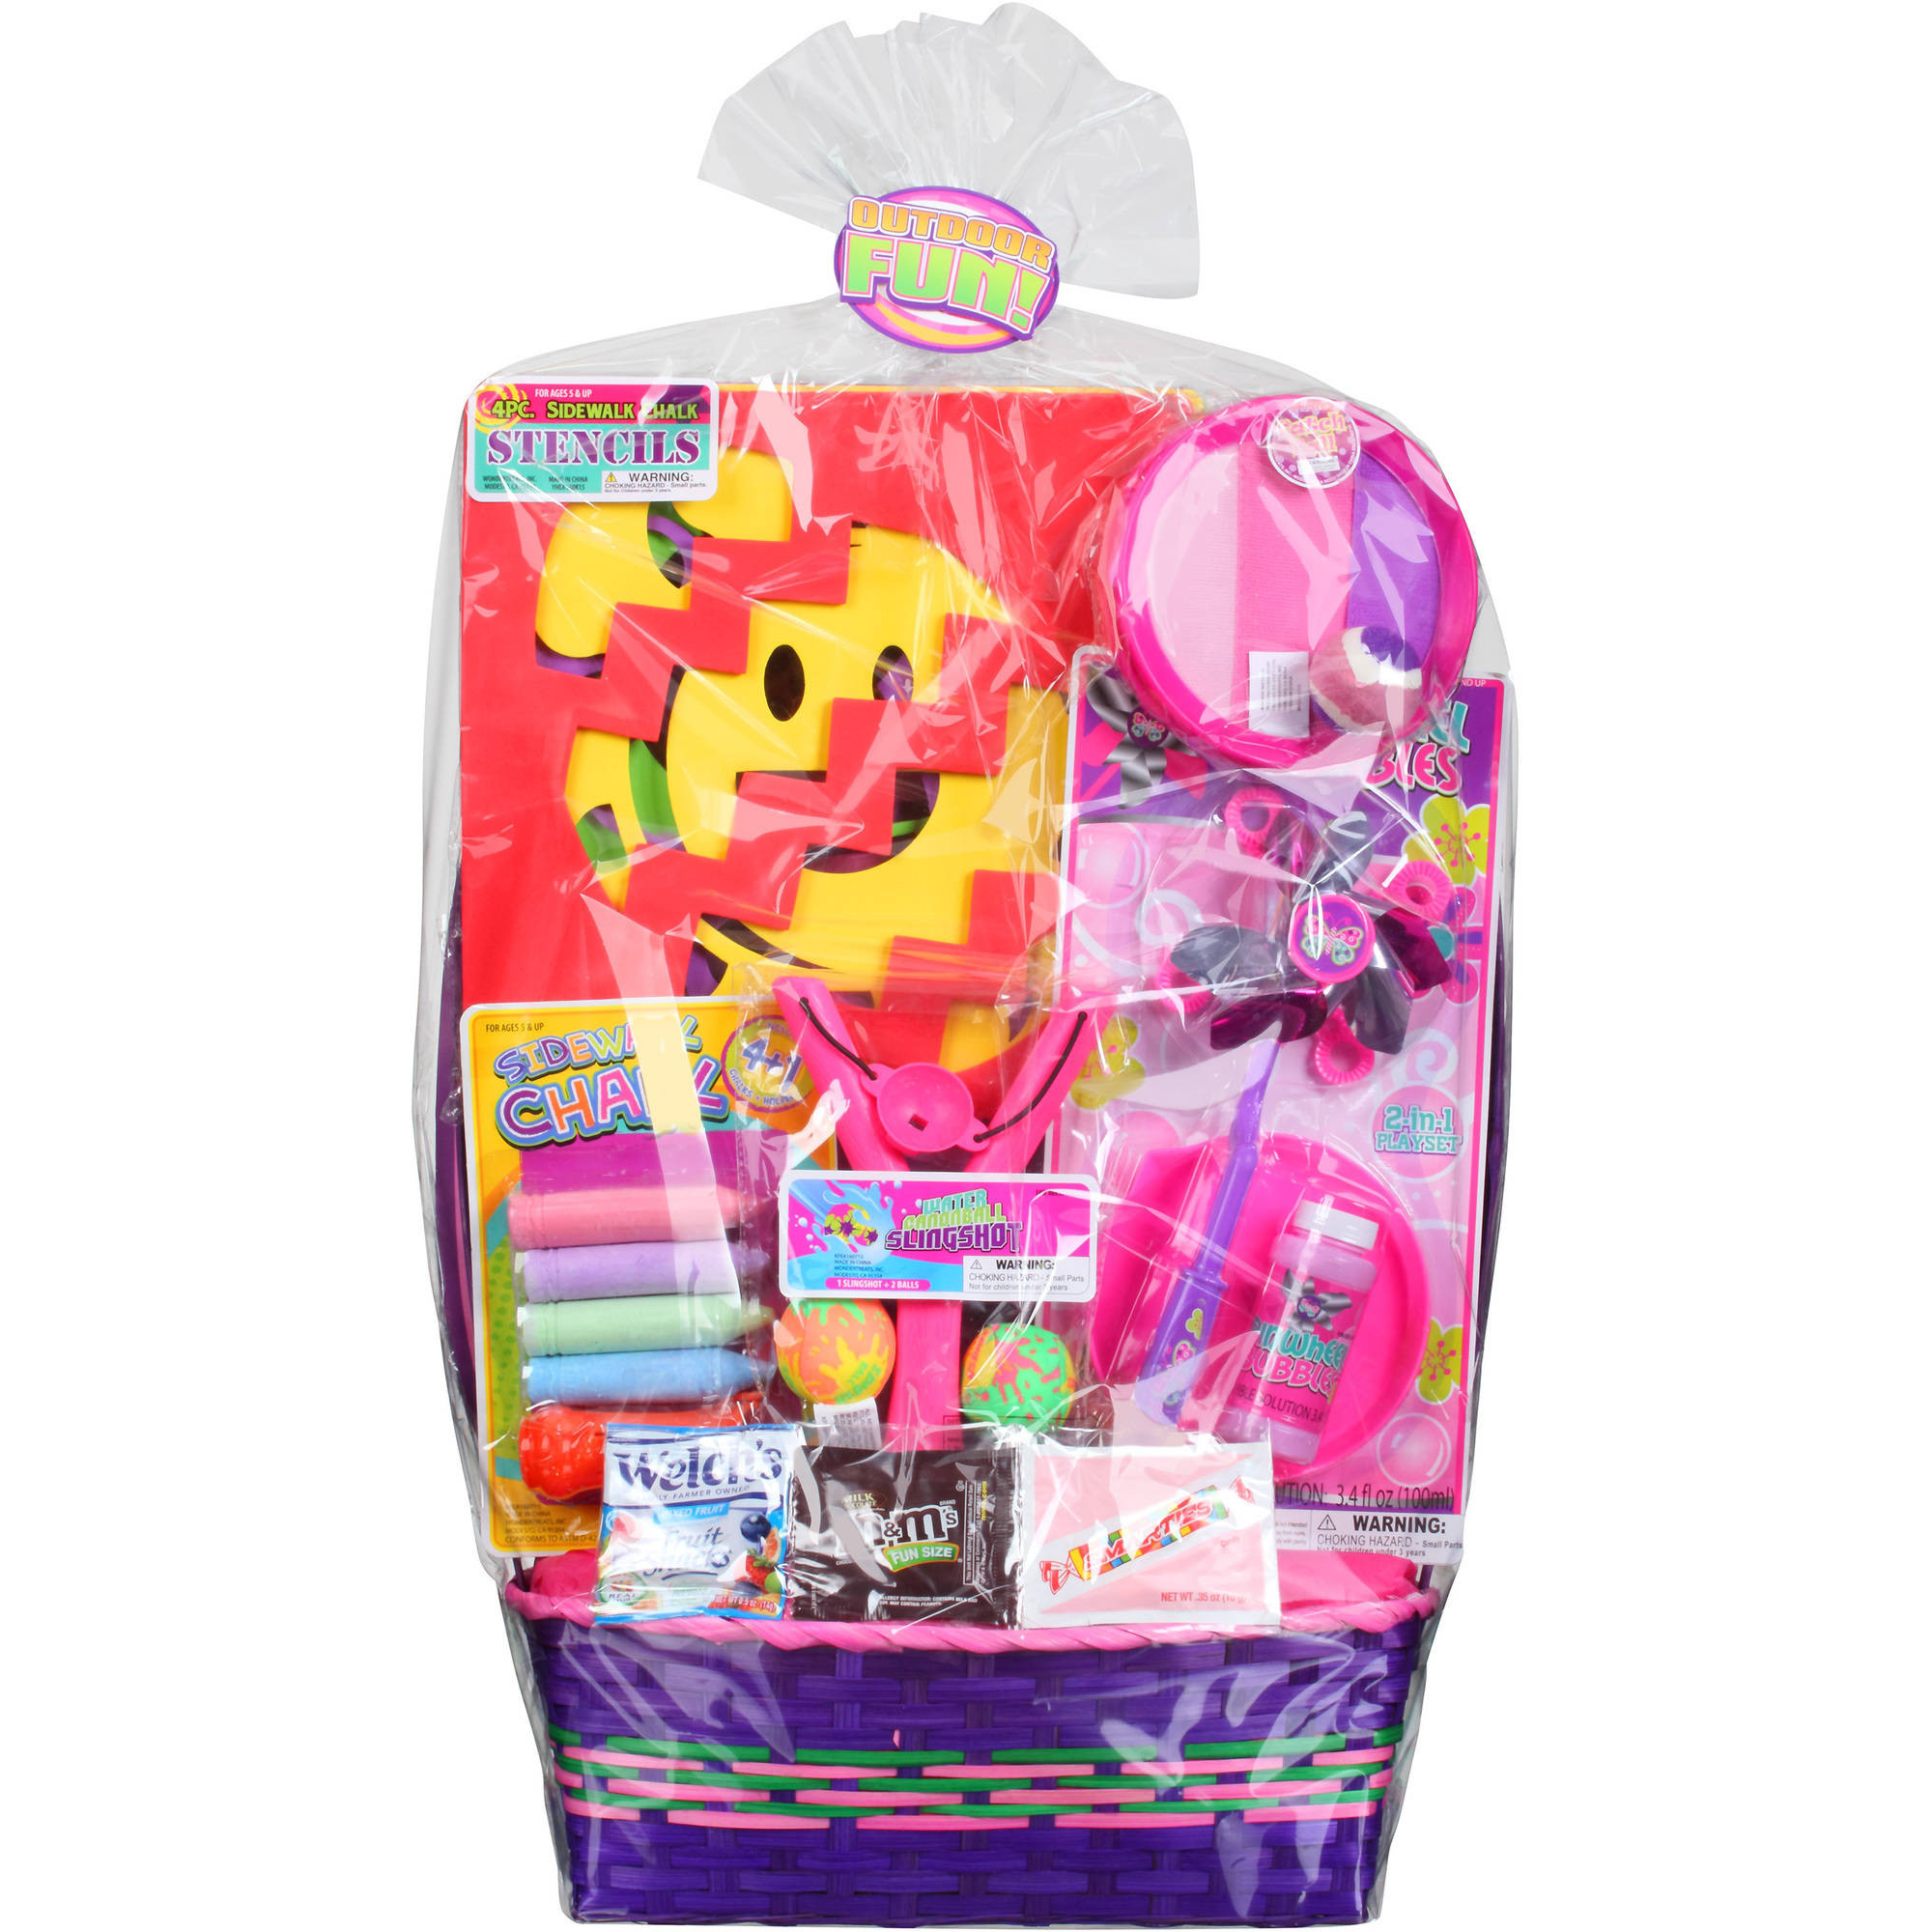 Walmart Easter Gifts
 Wondertreat Girls Outdoor Fun Easter Basket Walmart